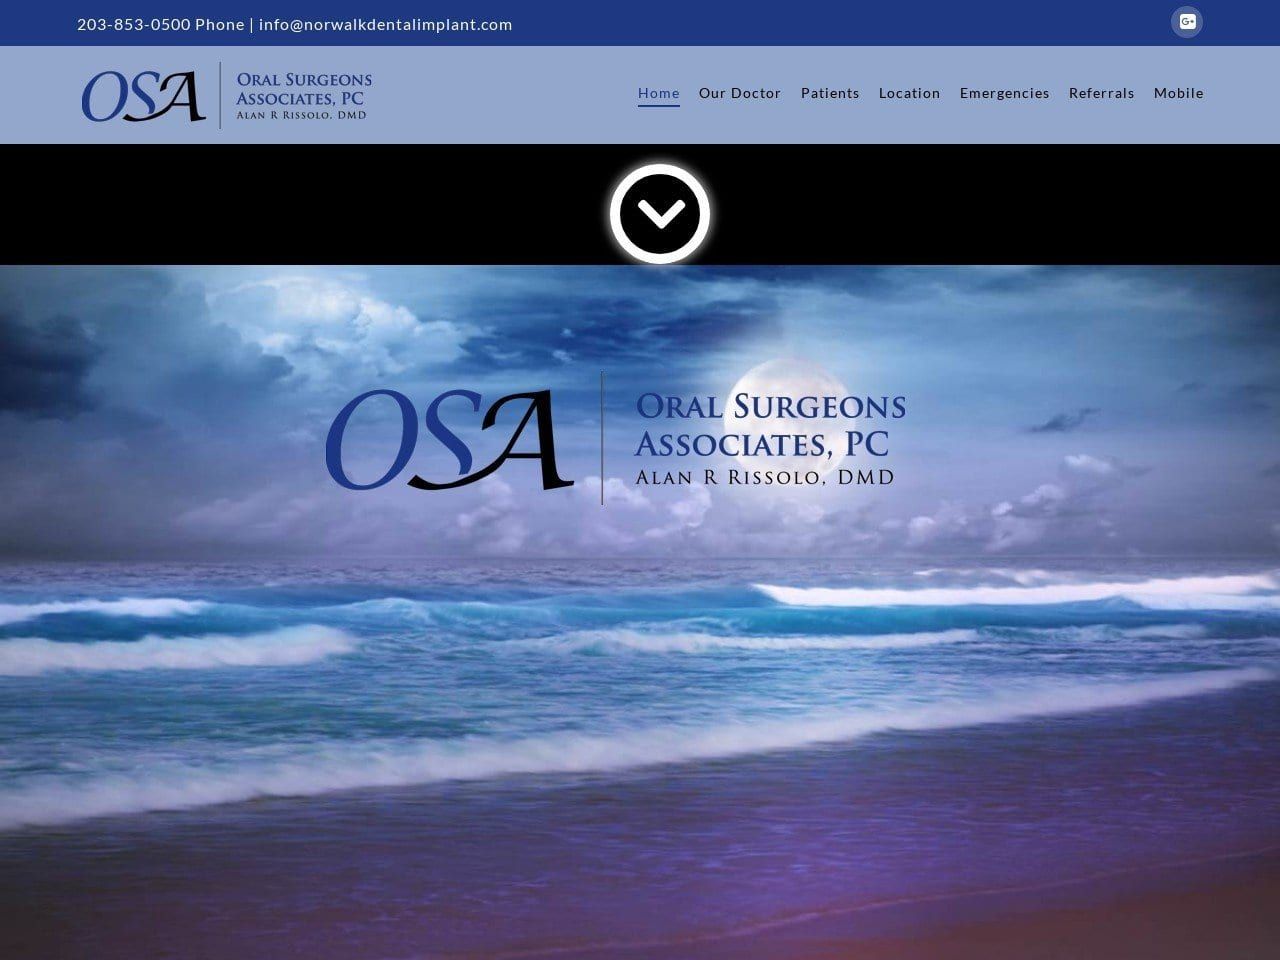 Oral Surgeons Associates PC Website Screenshot from norwalkdentalimplant.com